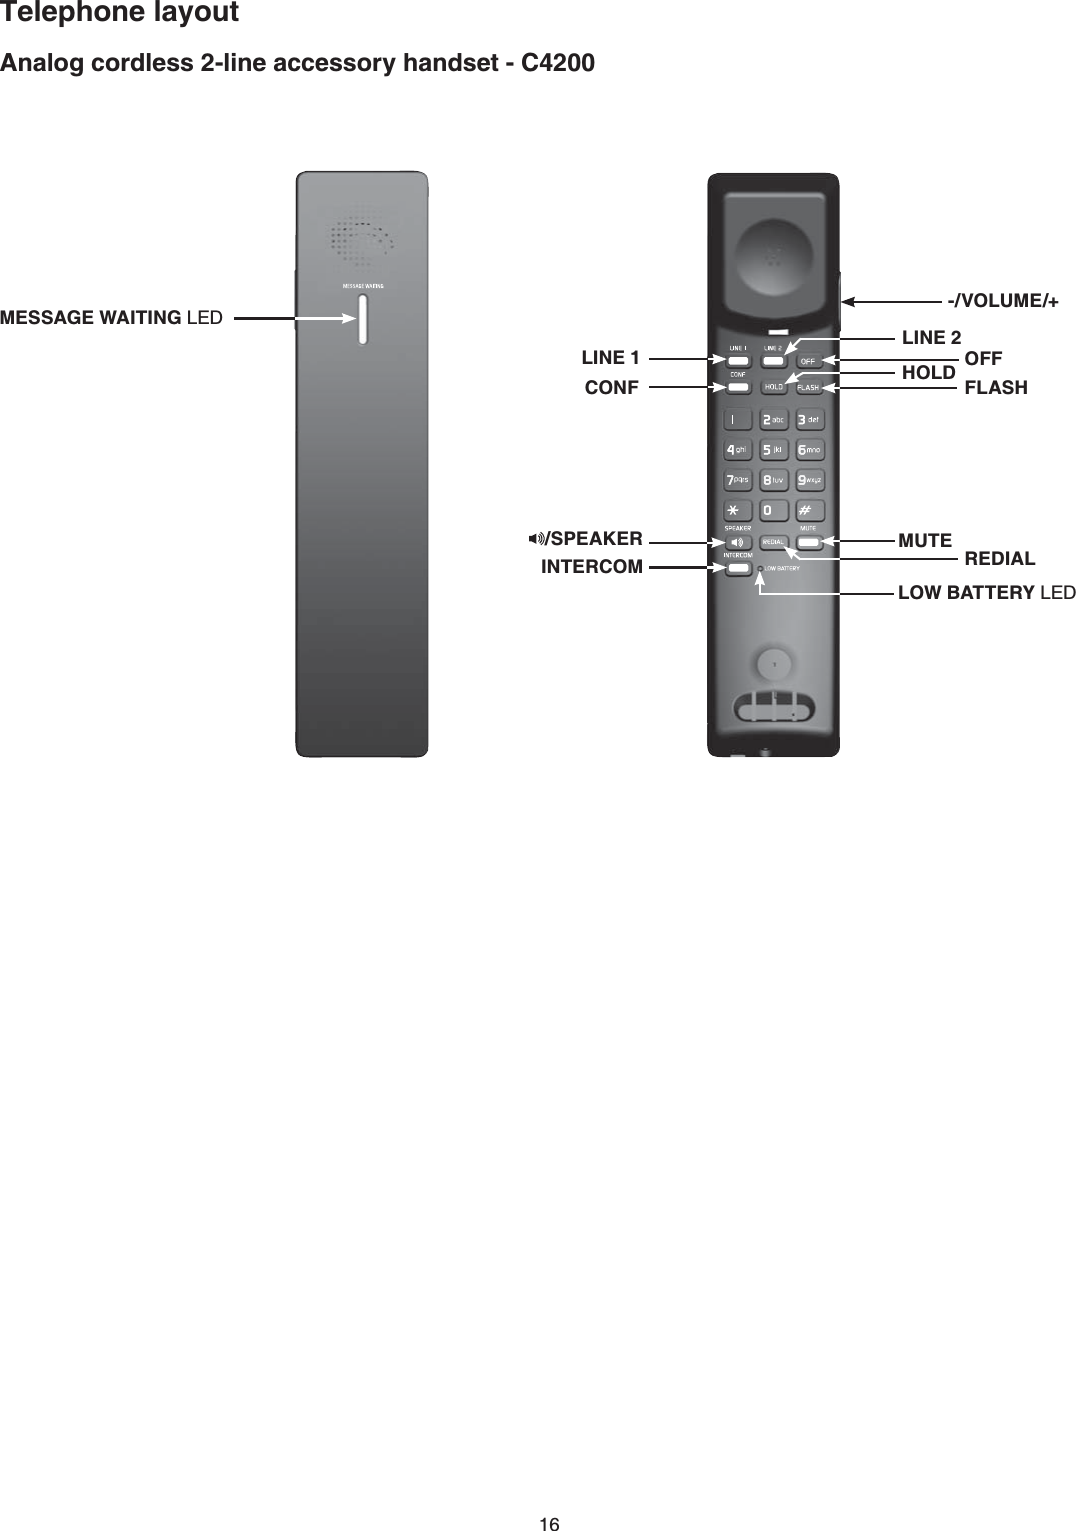 16Analog cordless 2-line accessory handset - C4200Telephone layoutLINE 1CONFLINE 2HOLD OFFFLASHMUTEMESSAGE WAITING LED -/VOLUME/+/SPEAKER REDIALINTERCOMLOW BATTERY LED